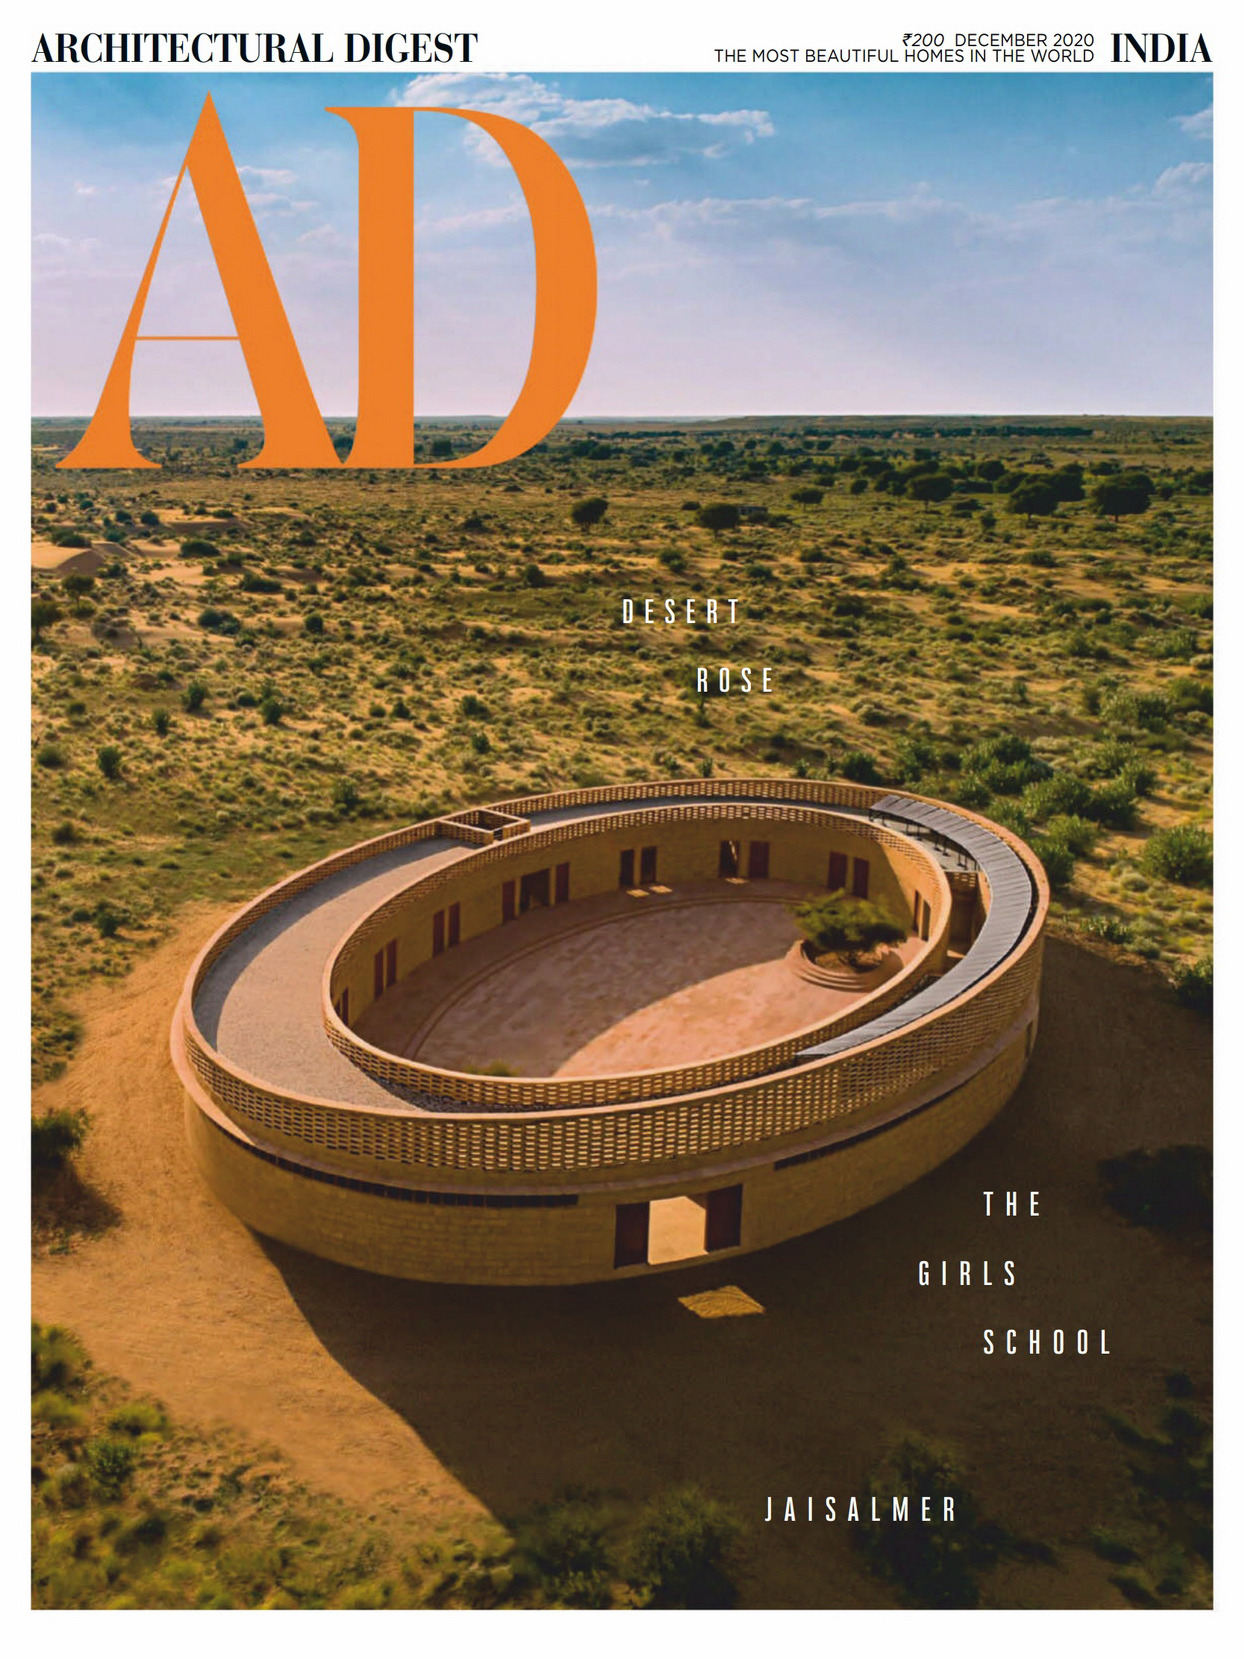 《AD》印度版室内室外设计杂志2020年12月号